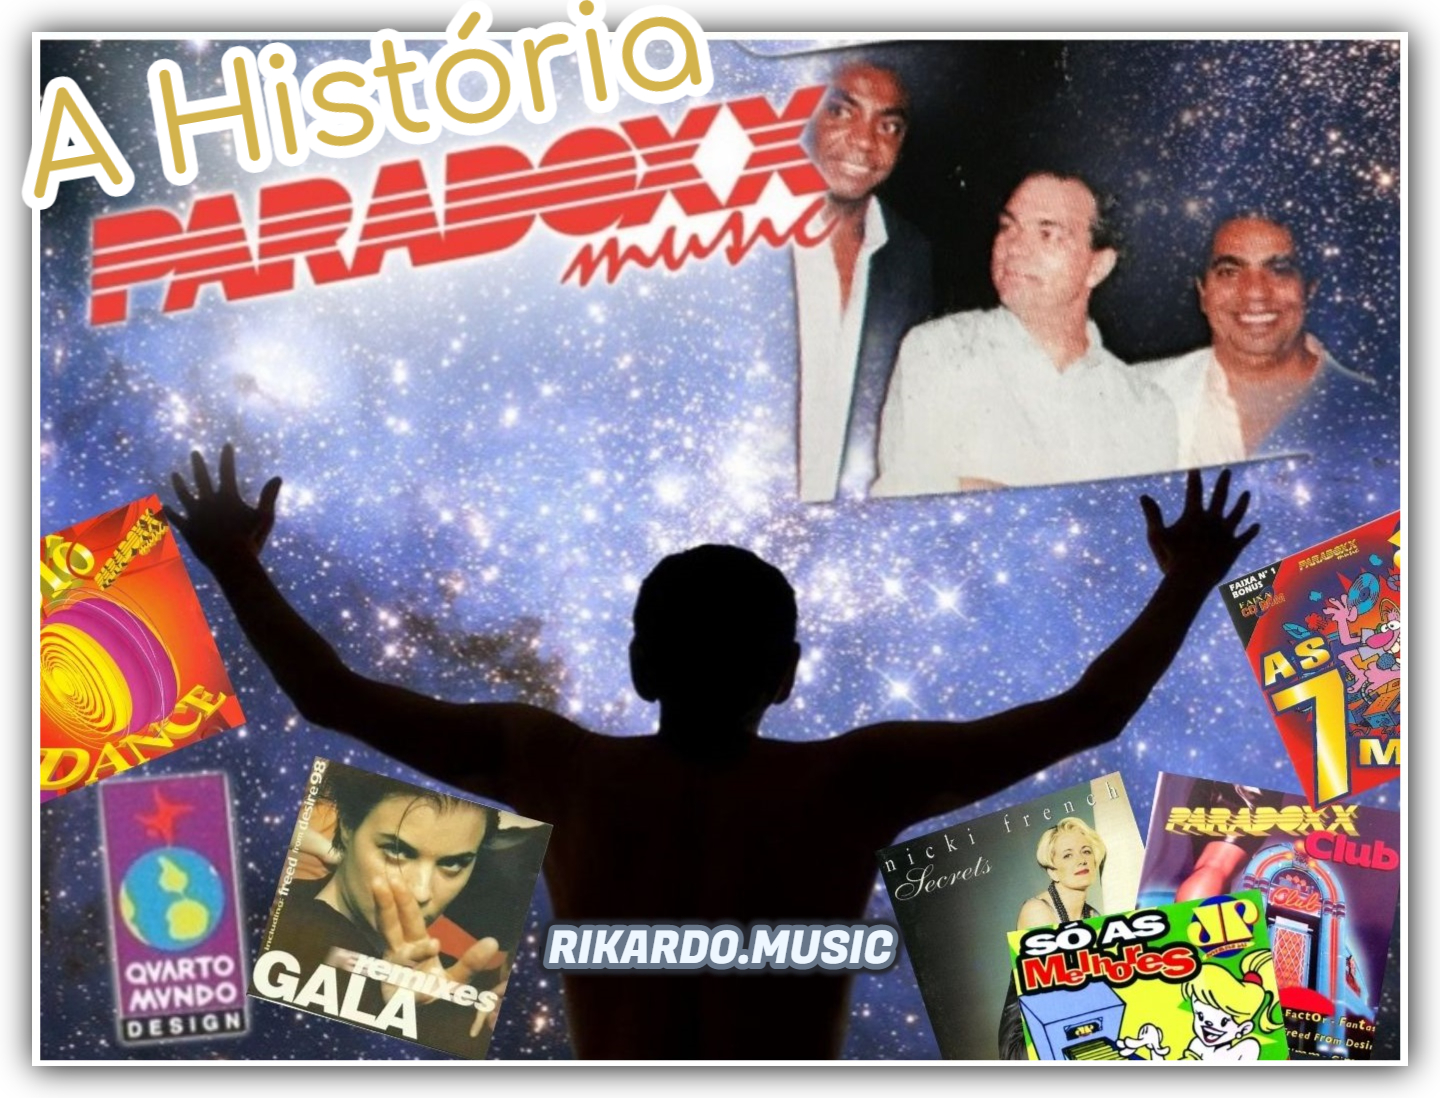 Stream set Dance Music das Baladas dos Anos 90 by dj Luis Lacerda